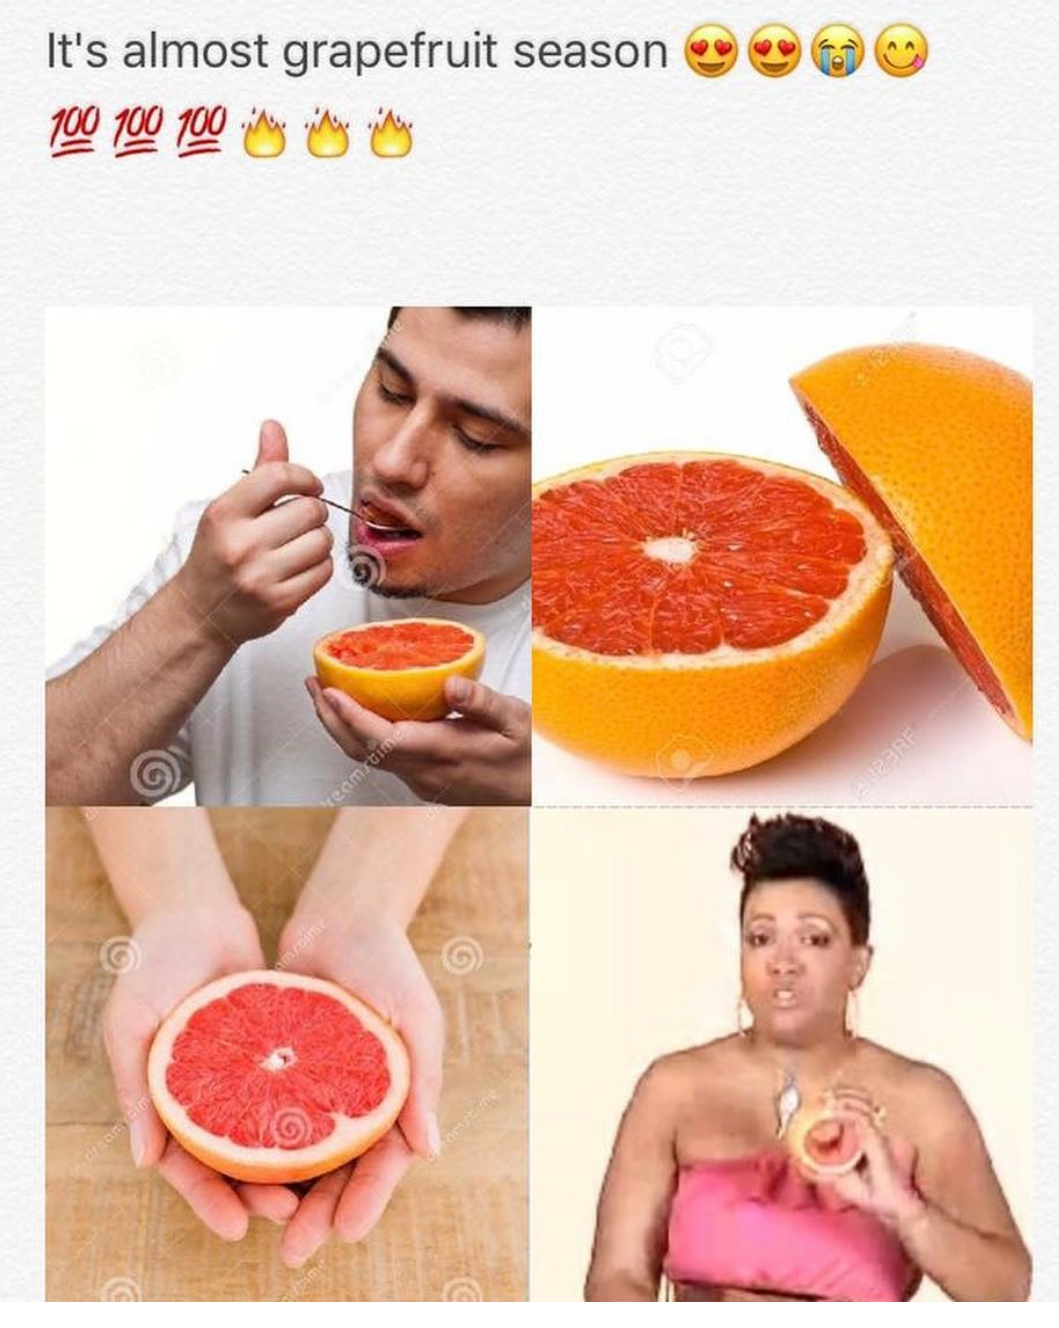 grapefruit meme - It's almost grapefruit season 100 100 100